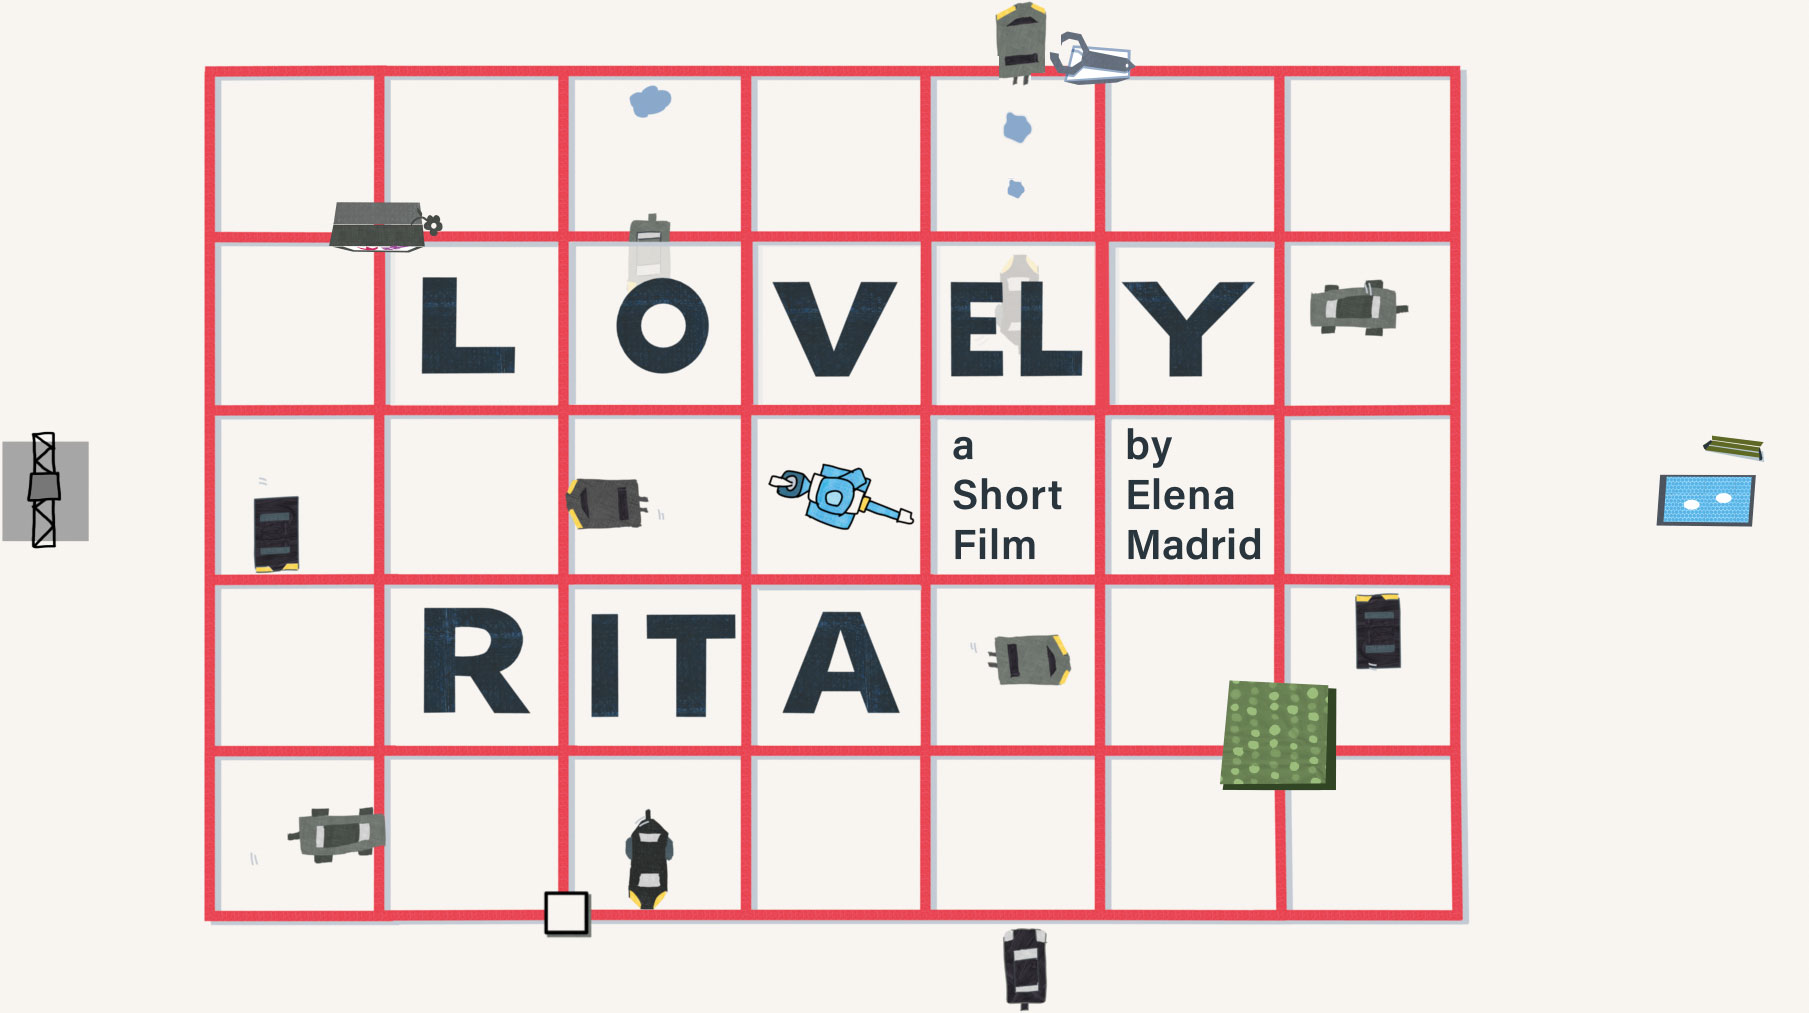 LOVELY RITA - A Short Film by Elena Madrid